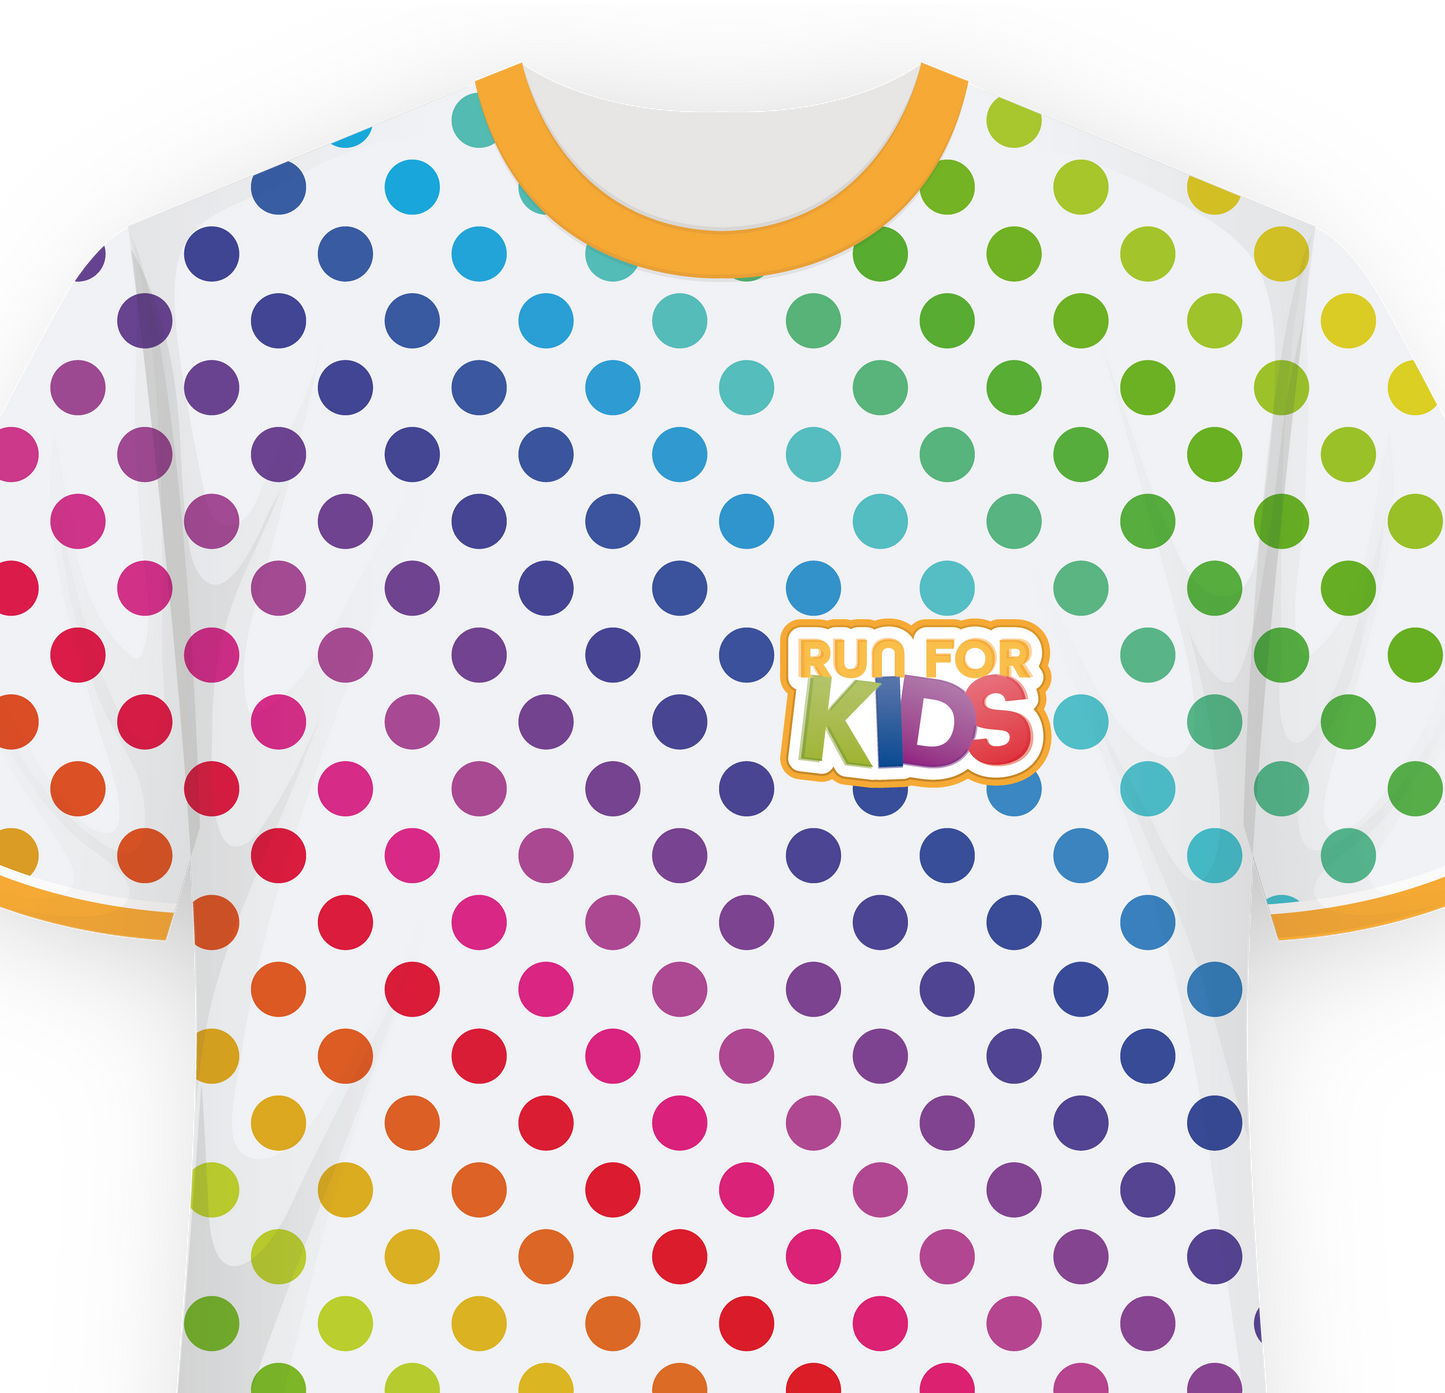 Shirt "Run for Kids" (2022)